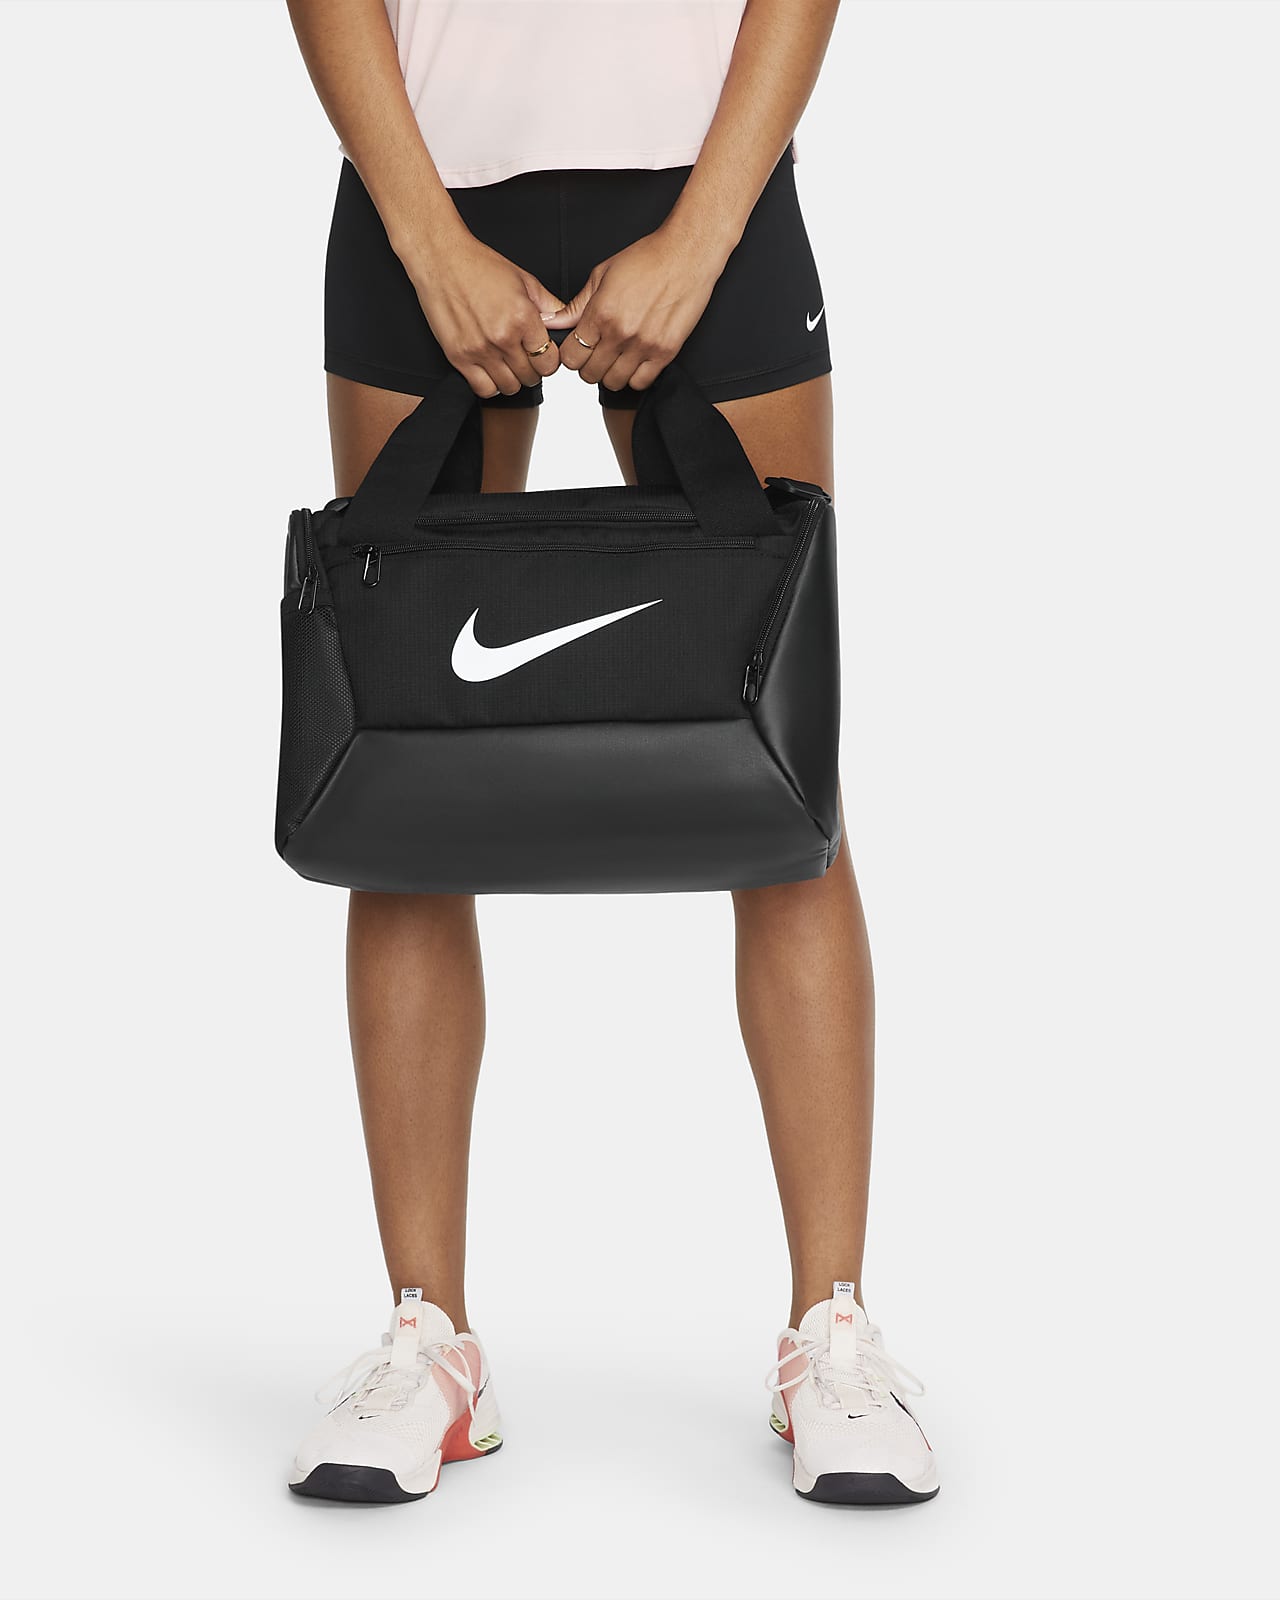 Training bag Nike Brasilia 9.5 XS